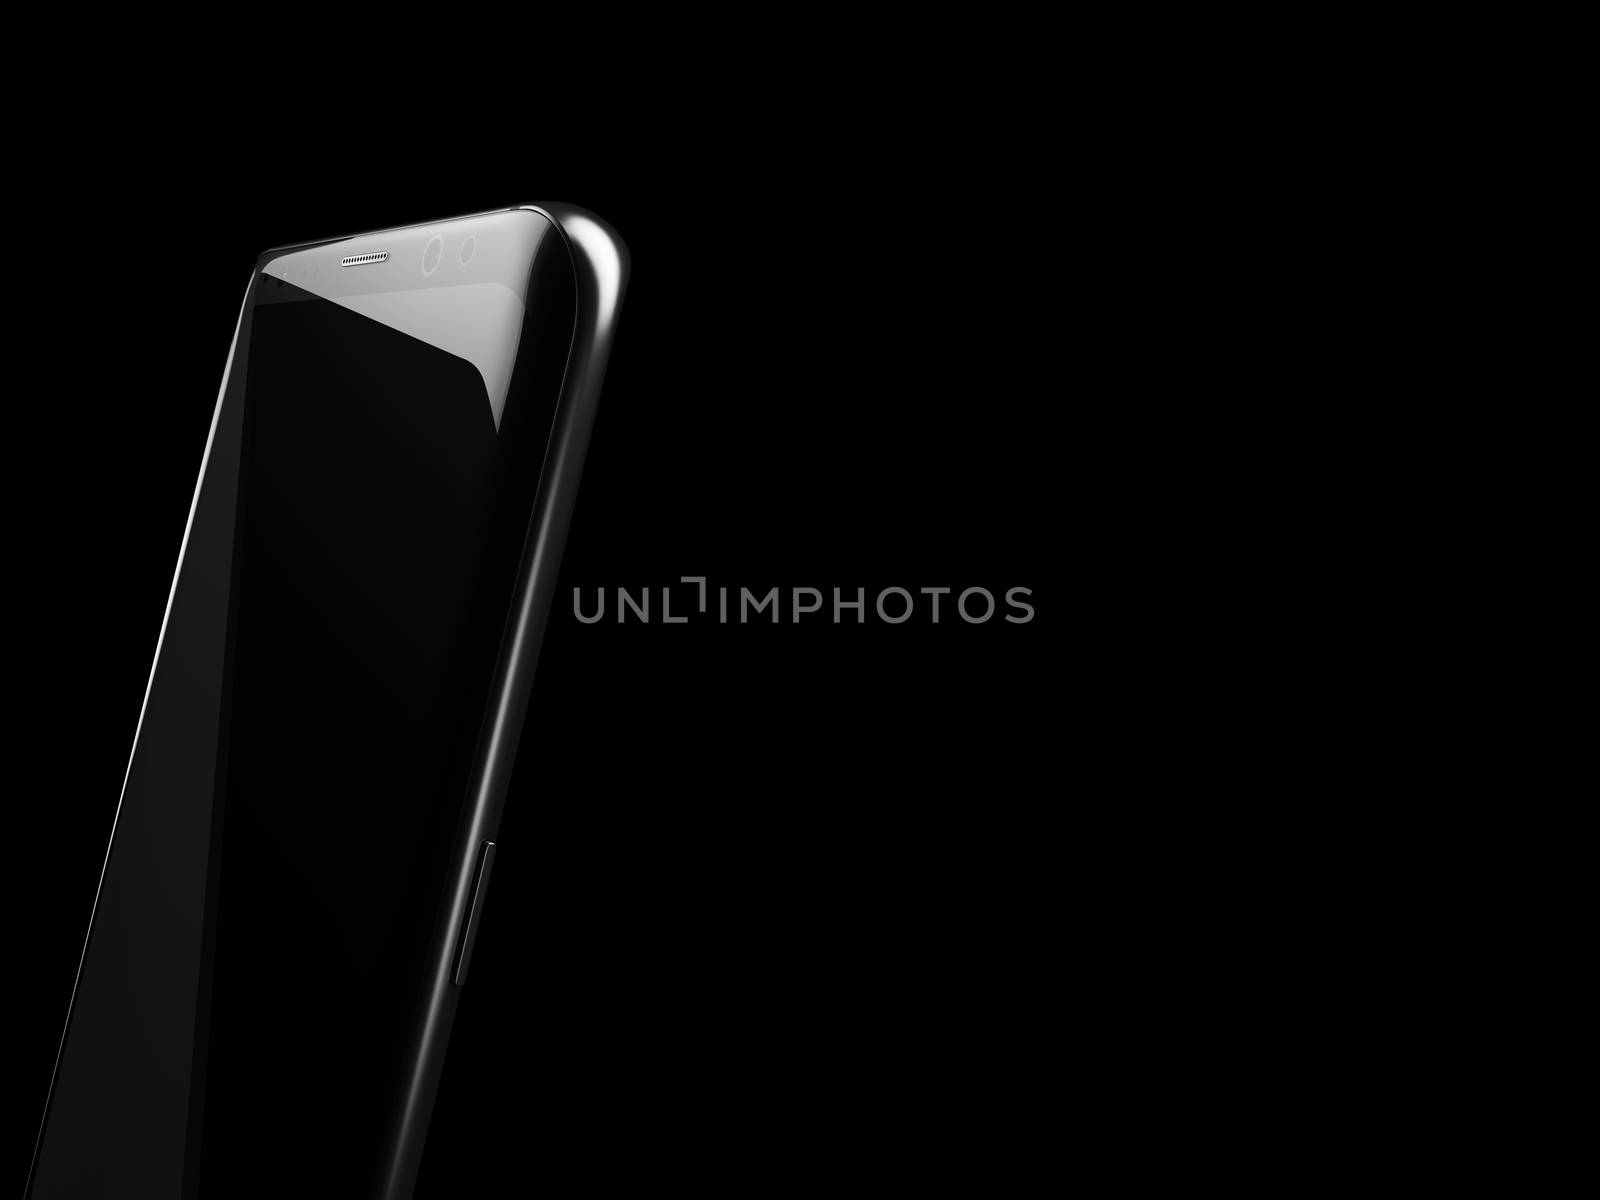 3d Illustration of Black smartphone on a black background by tussik